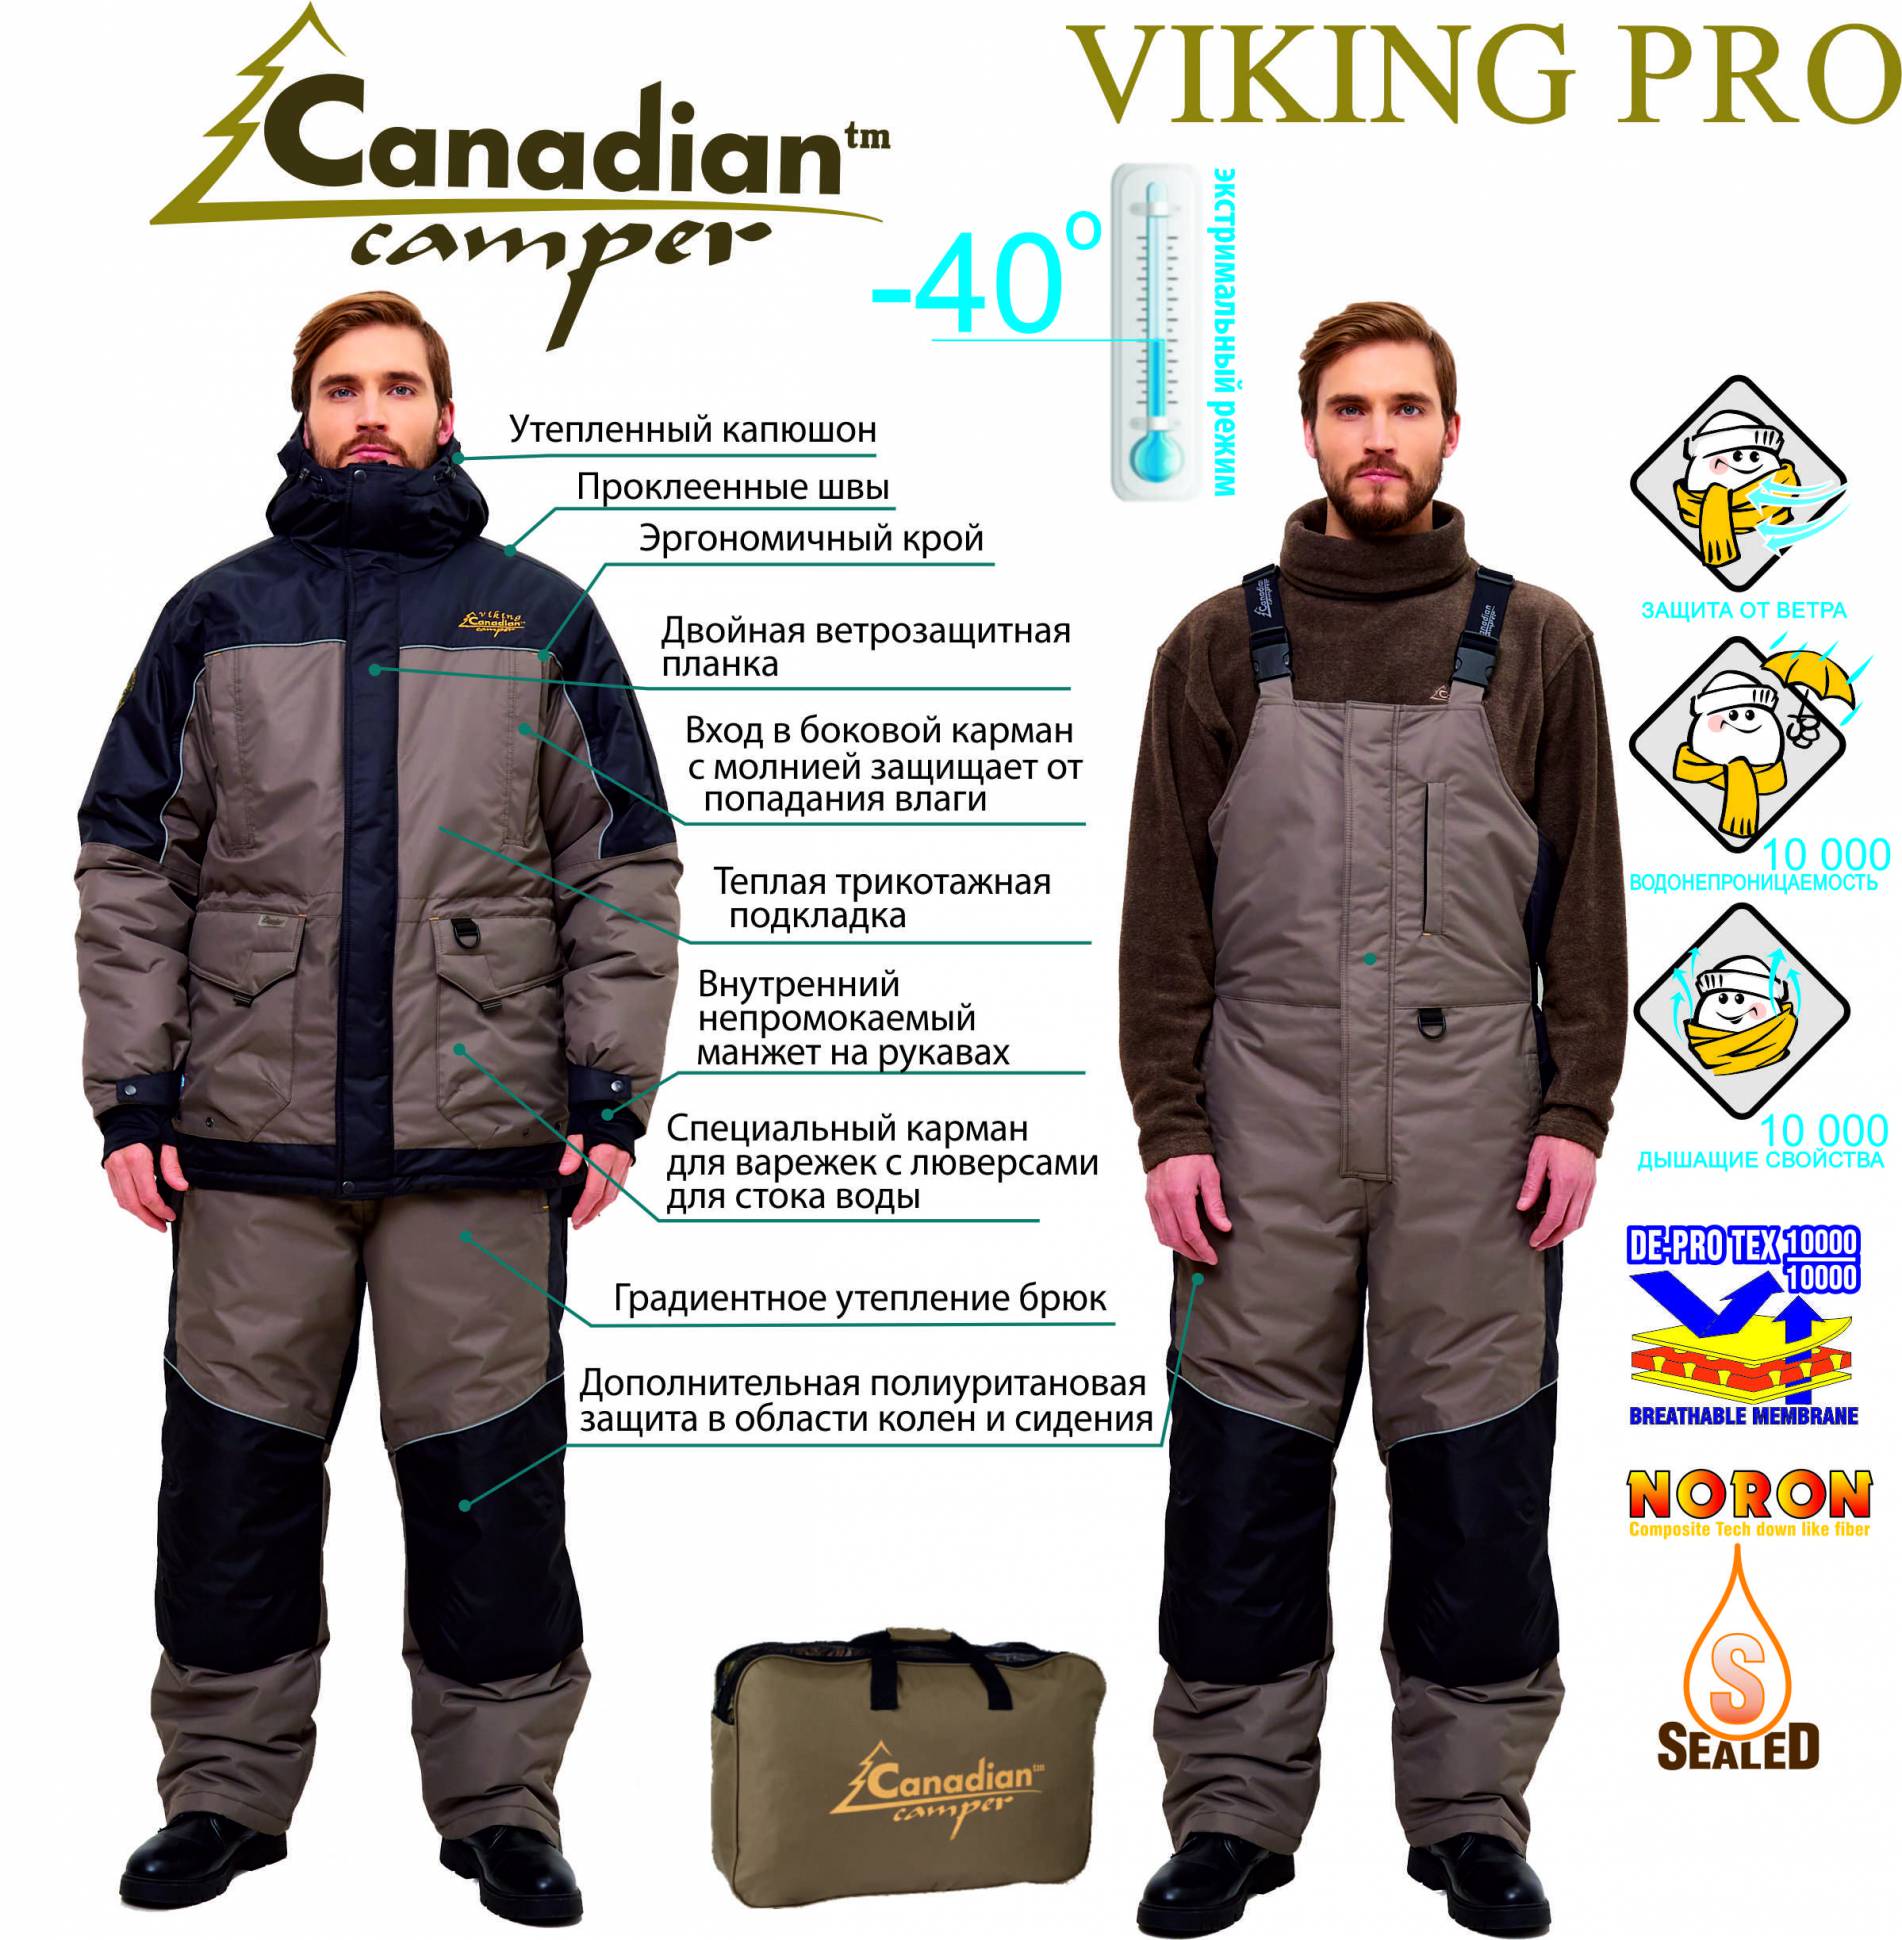 Зимний костюм Canadian Camper Viking Pro 4630049512910 Black- Stone XXXL/58 (182-188)